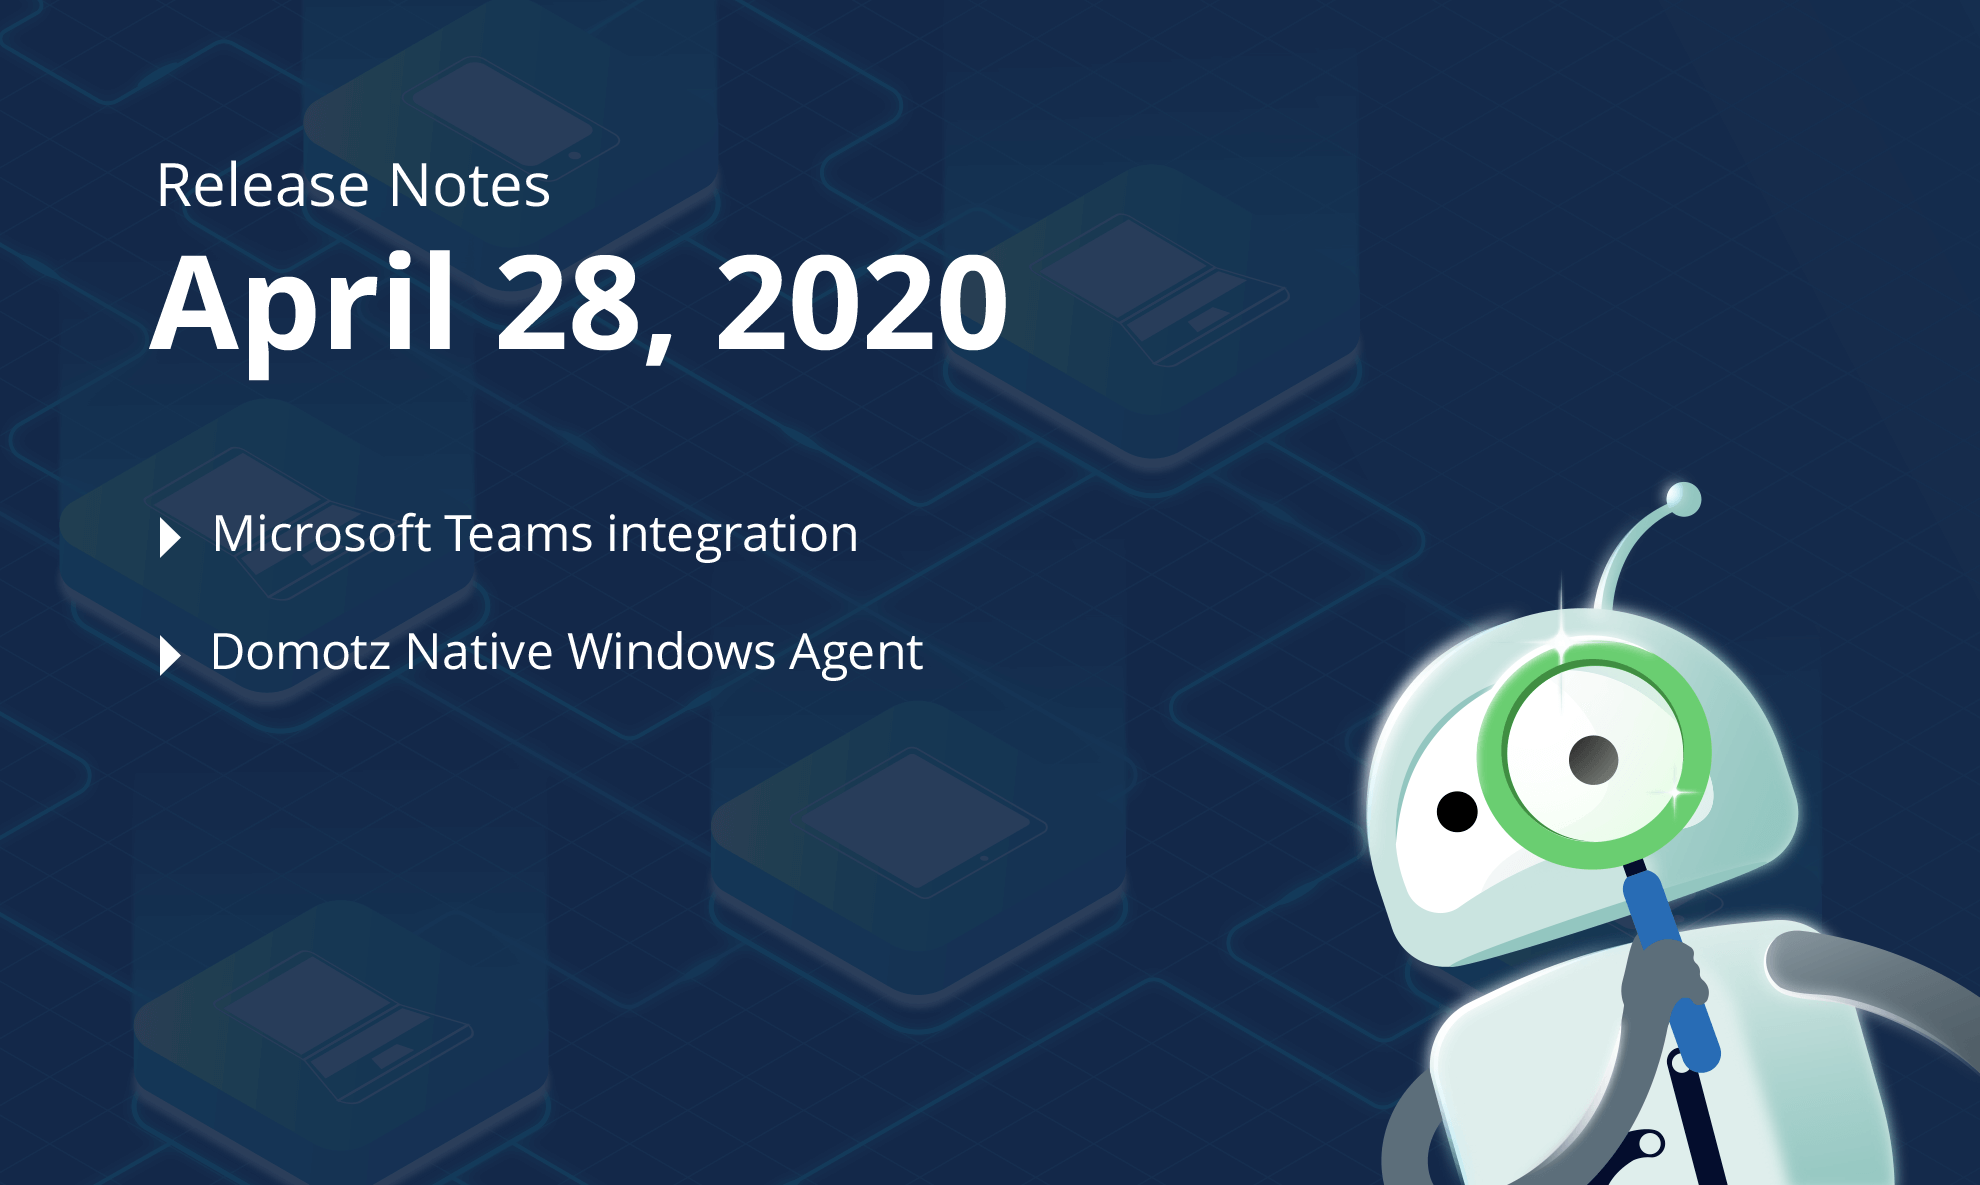 April 28th, 2020 - Microsoft Teams integration